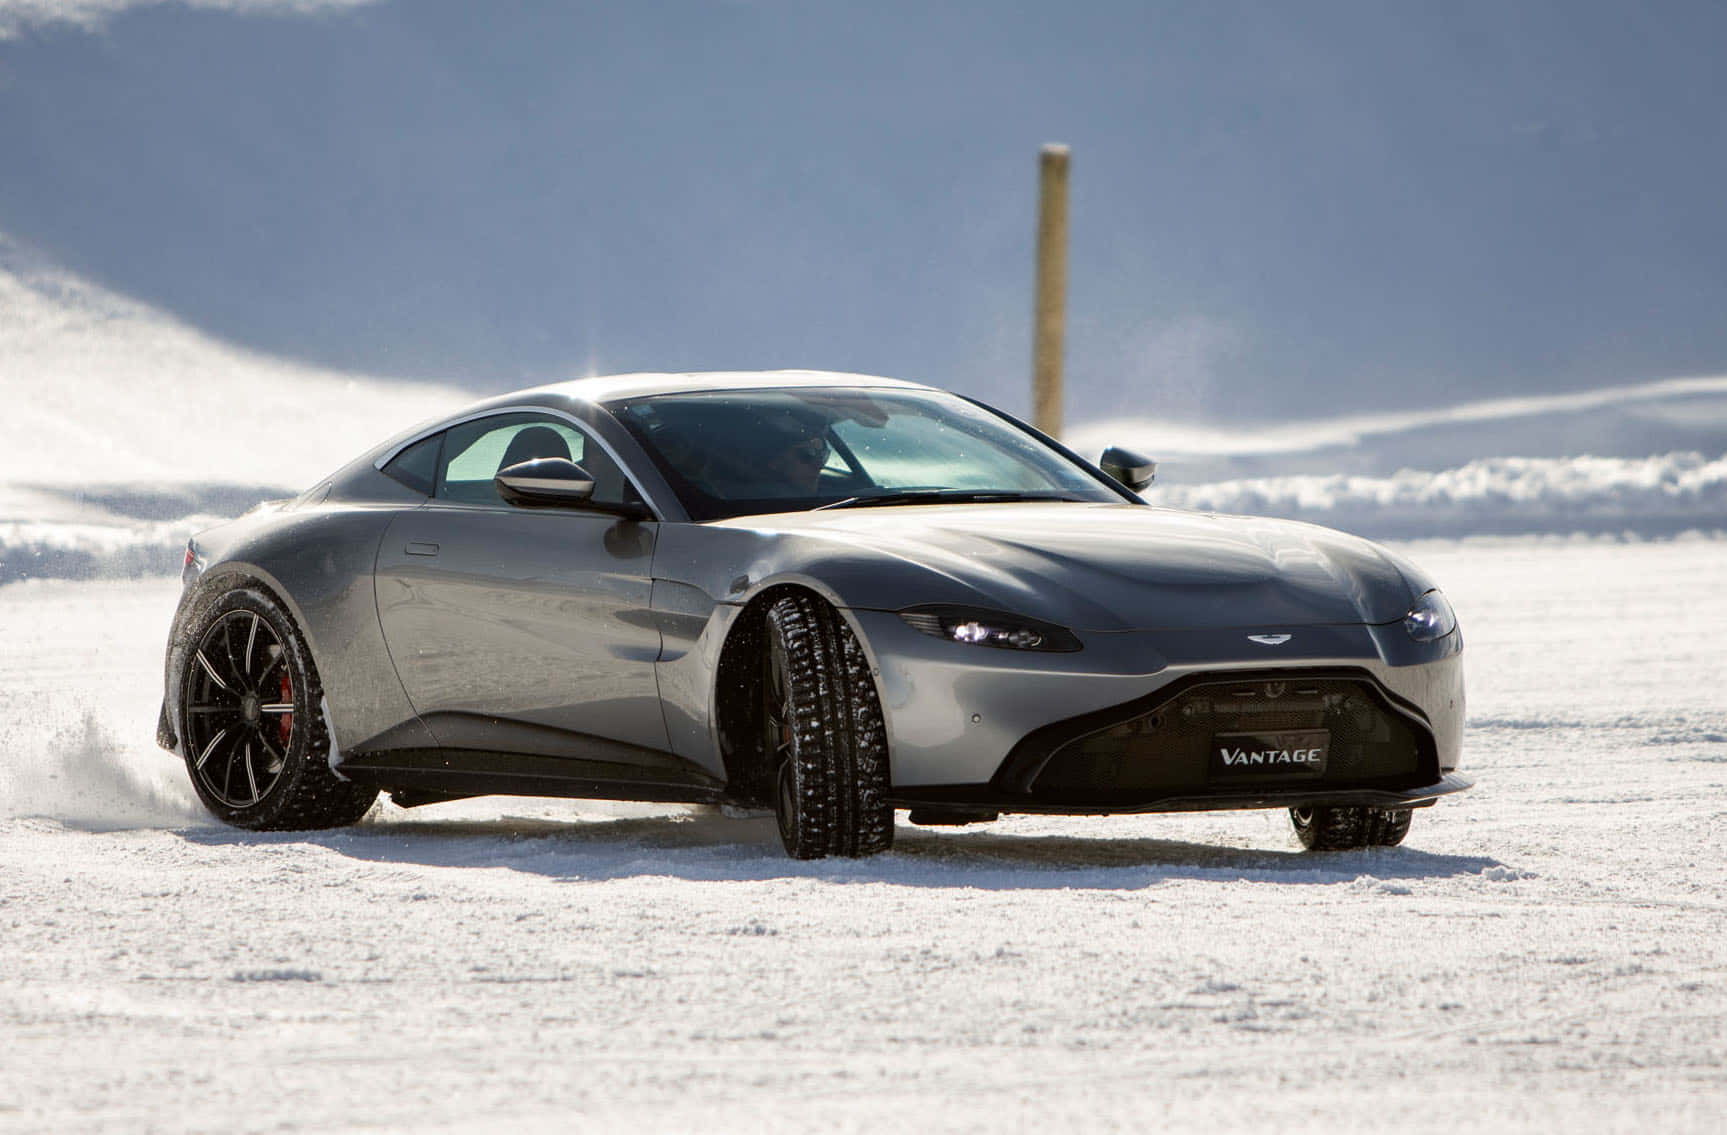 Aston Martin Vantage Gt Driving On Snow